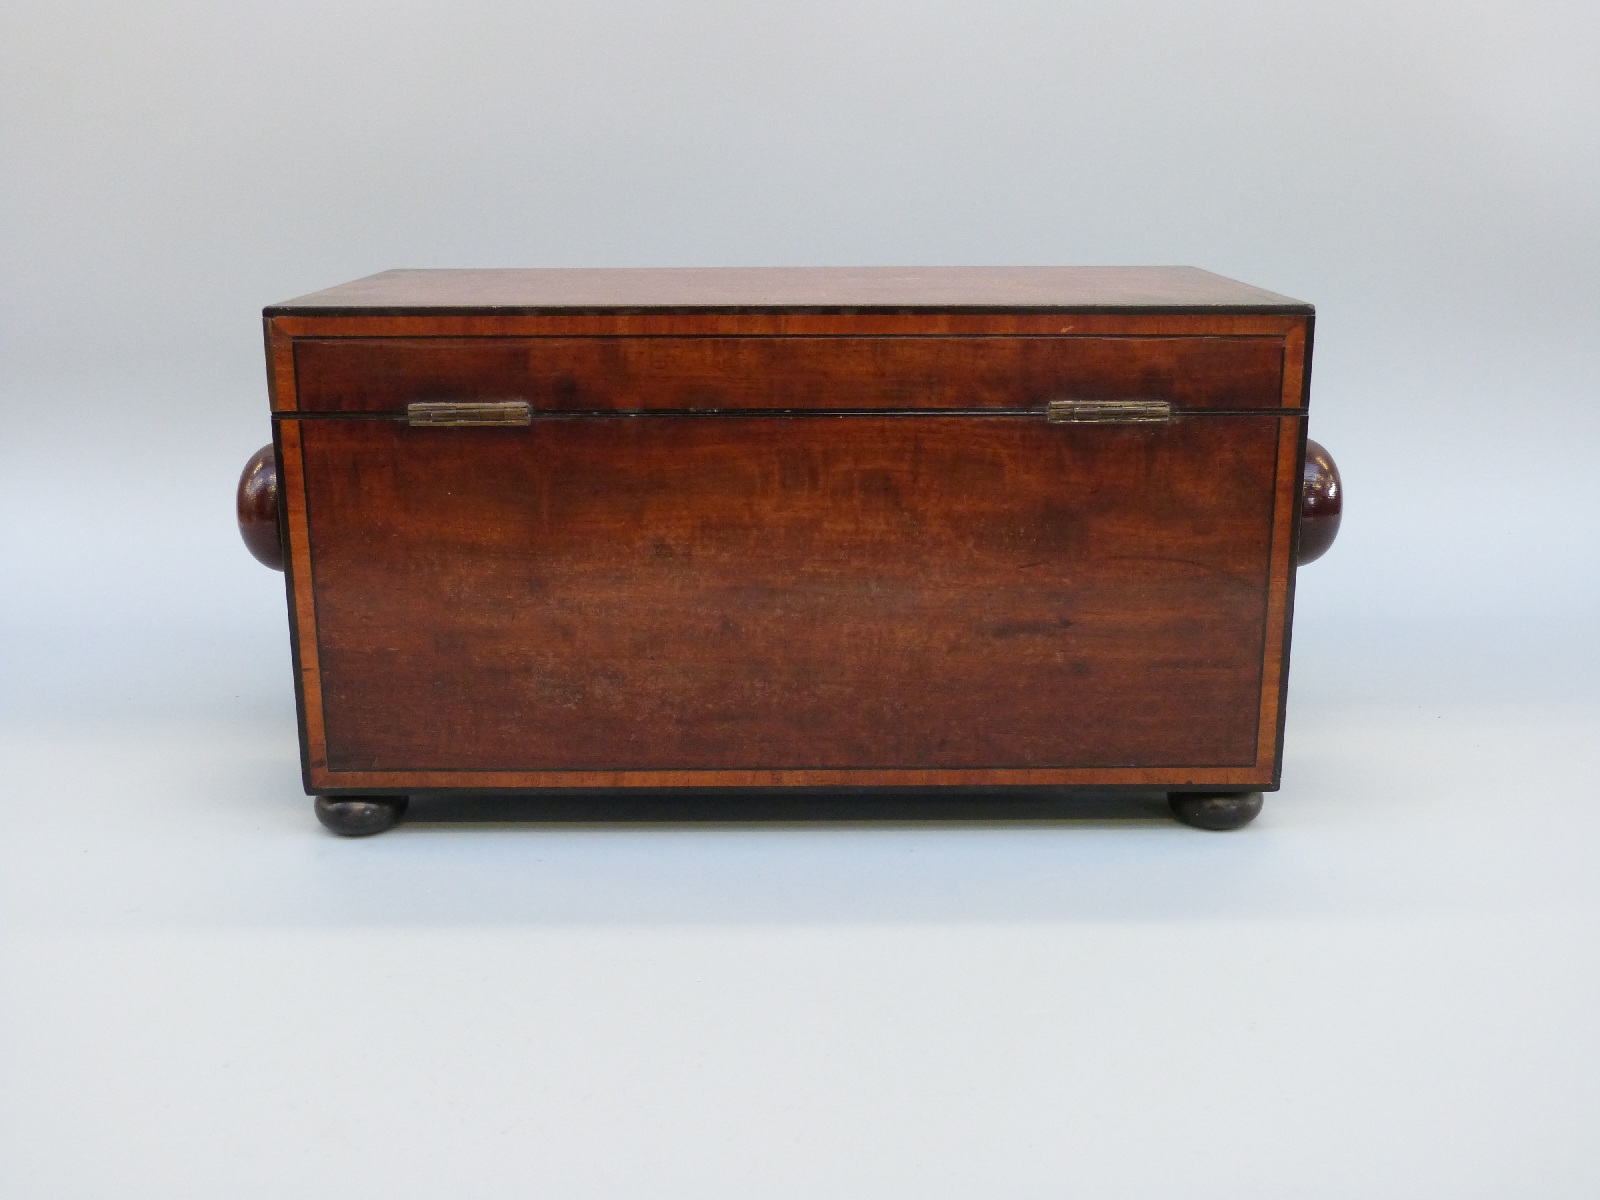 An early 19thC mahogany tea caddy of rectangular form with inlaid ebony detail, raised on bun feet, - Image 7 of 8